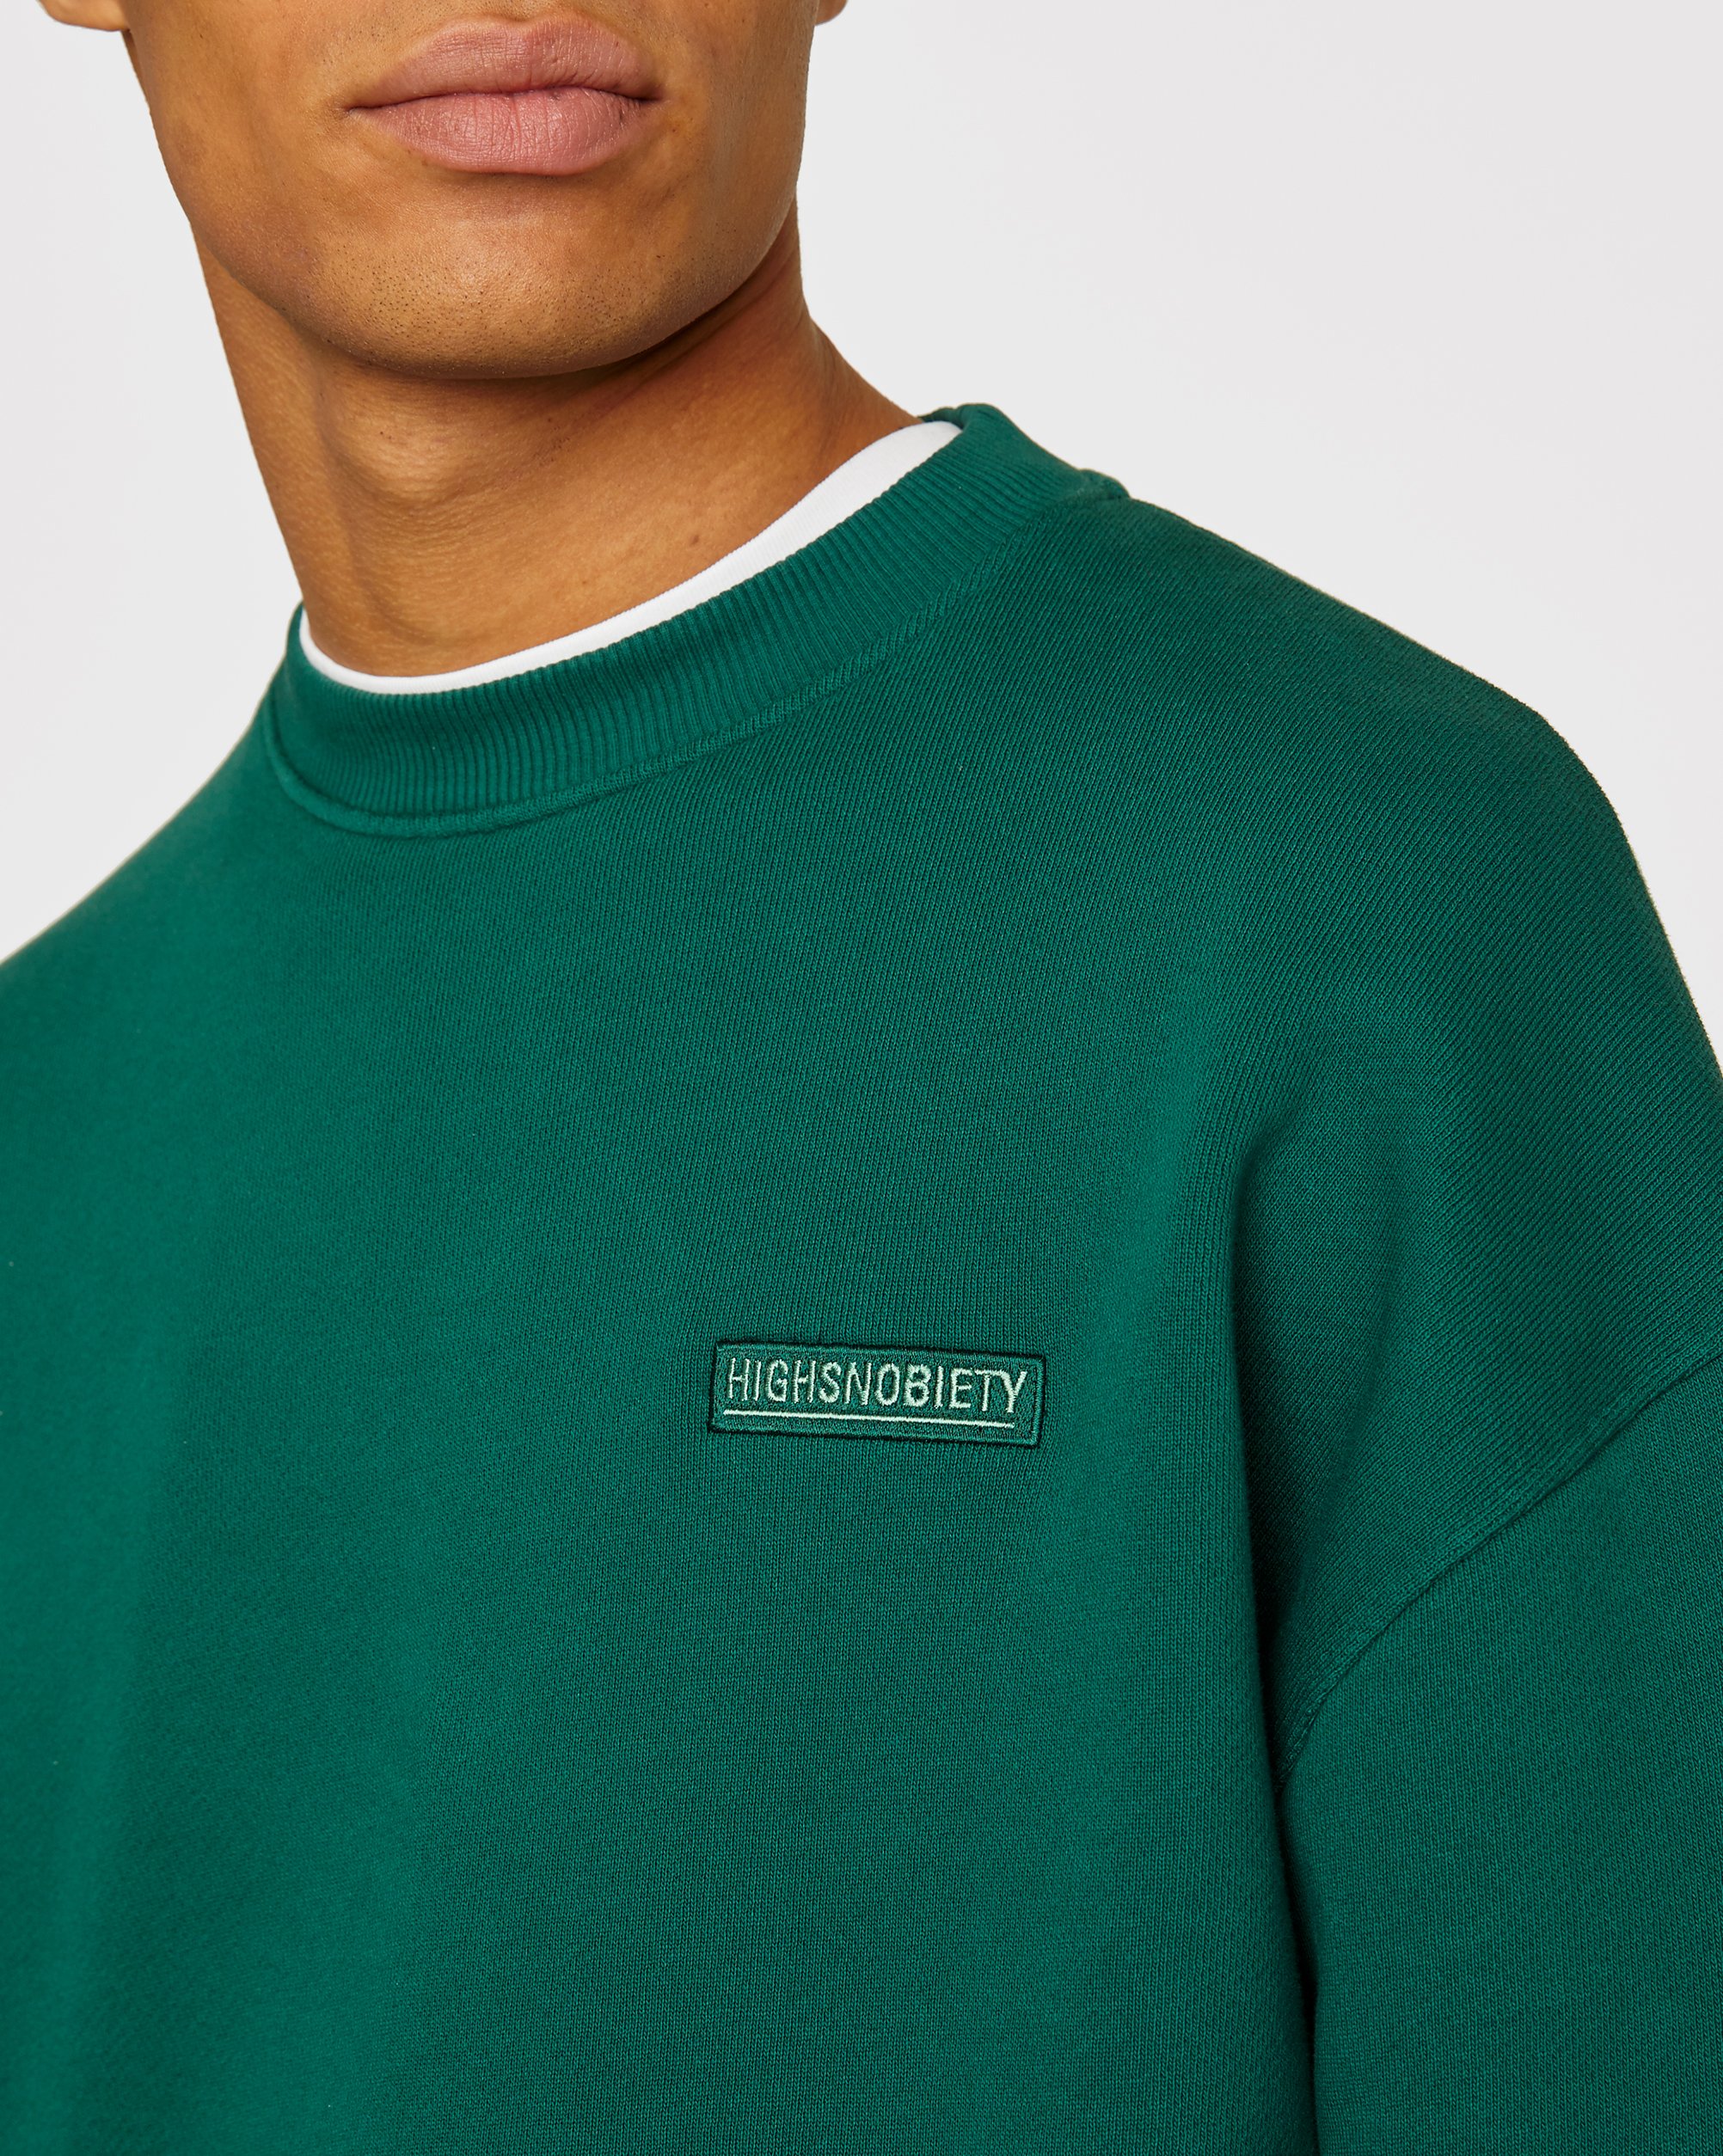 Highsnobiety - Staples Sweatshirt Green - Clothing - Green - Image 5